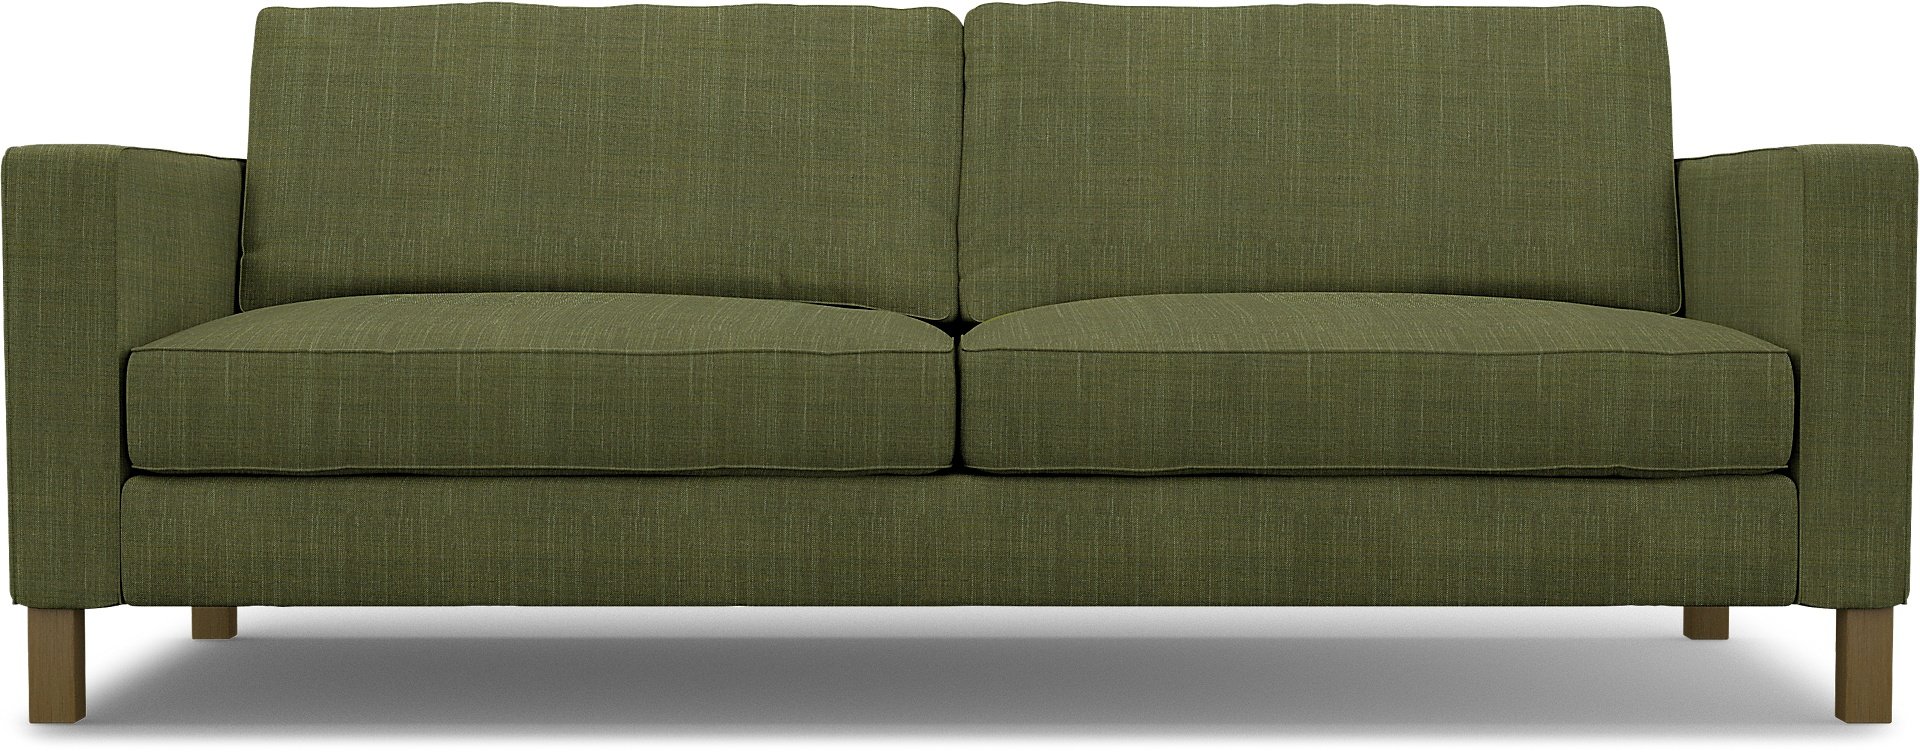 IKEA - Karlstad 3 Seater Sofa Cover, Moss Green, Boucle & Texture - Bemz